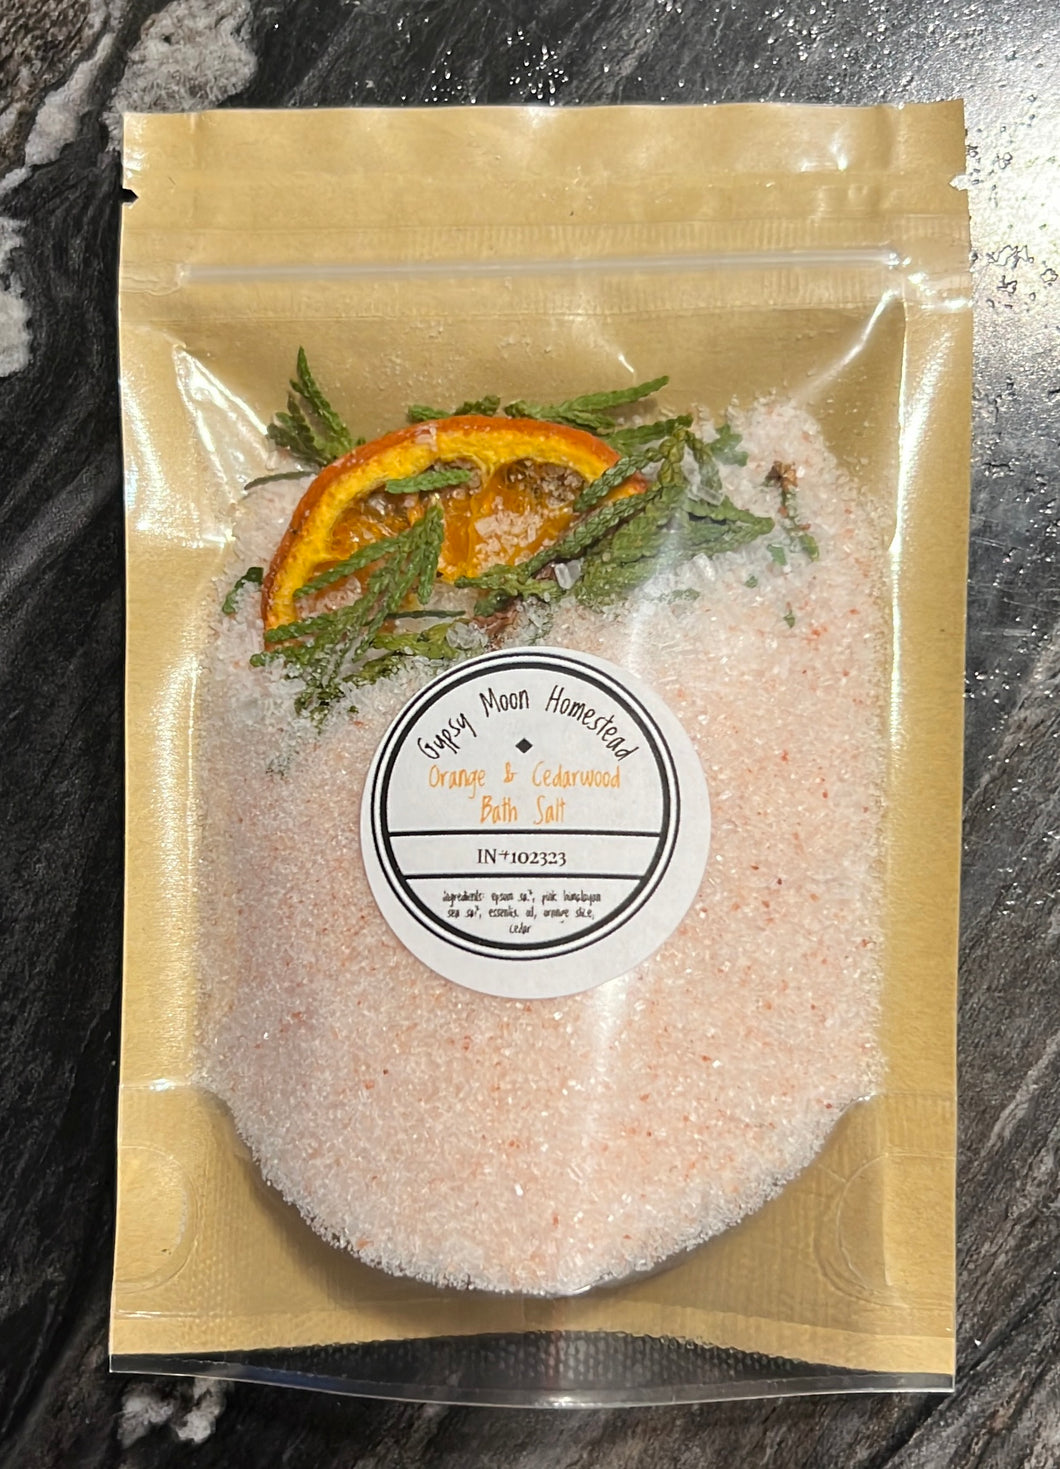 Orange & Cedarwood Bath Salt